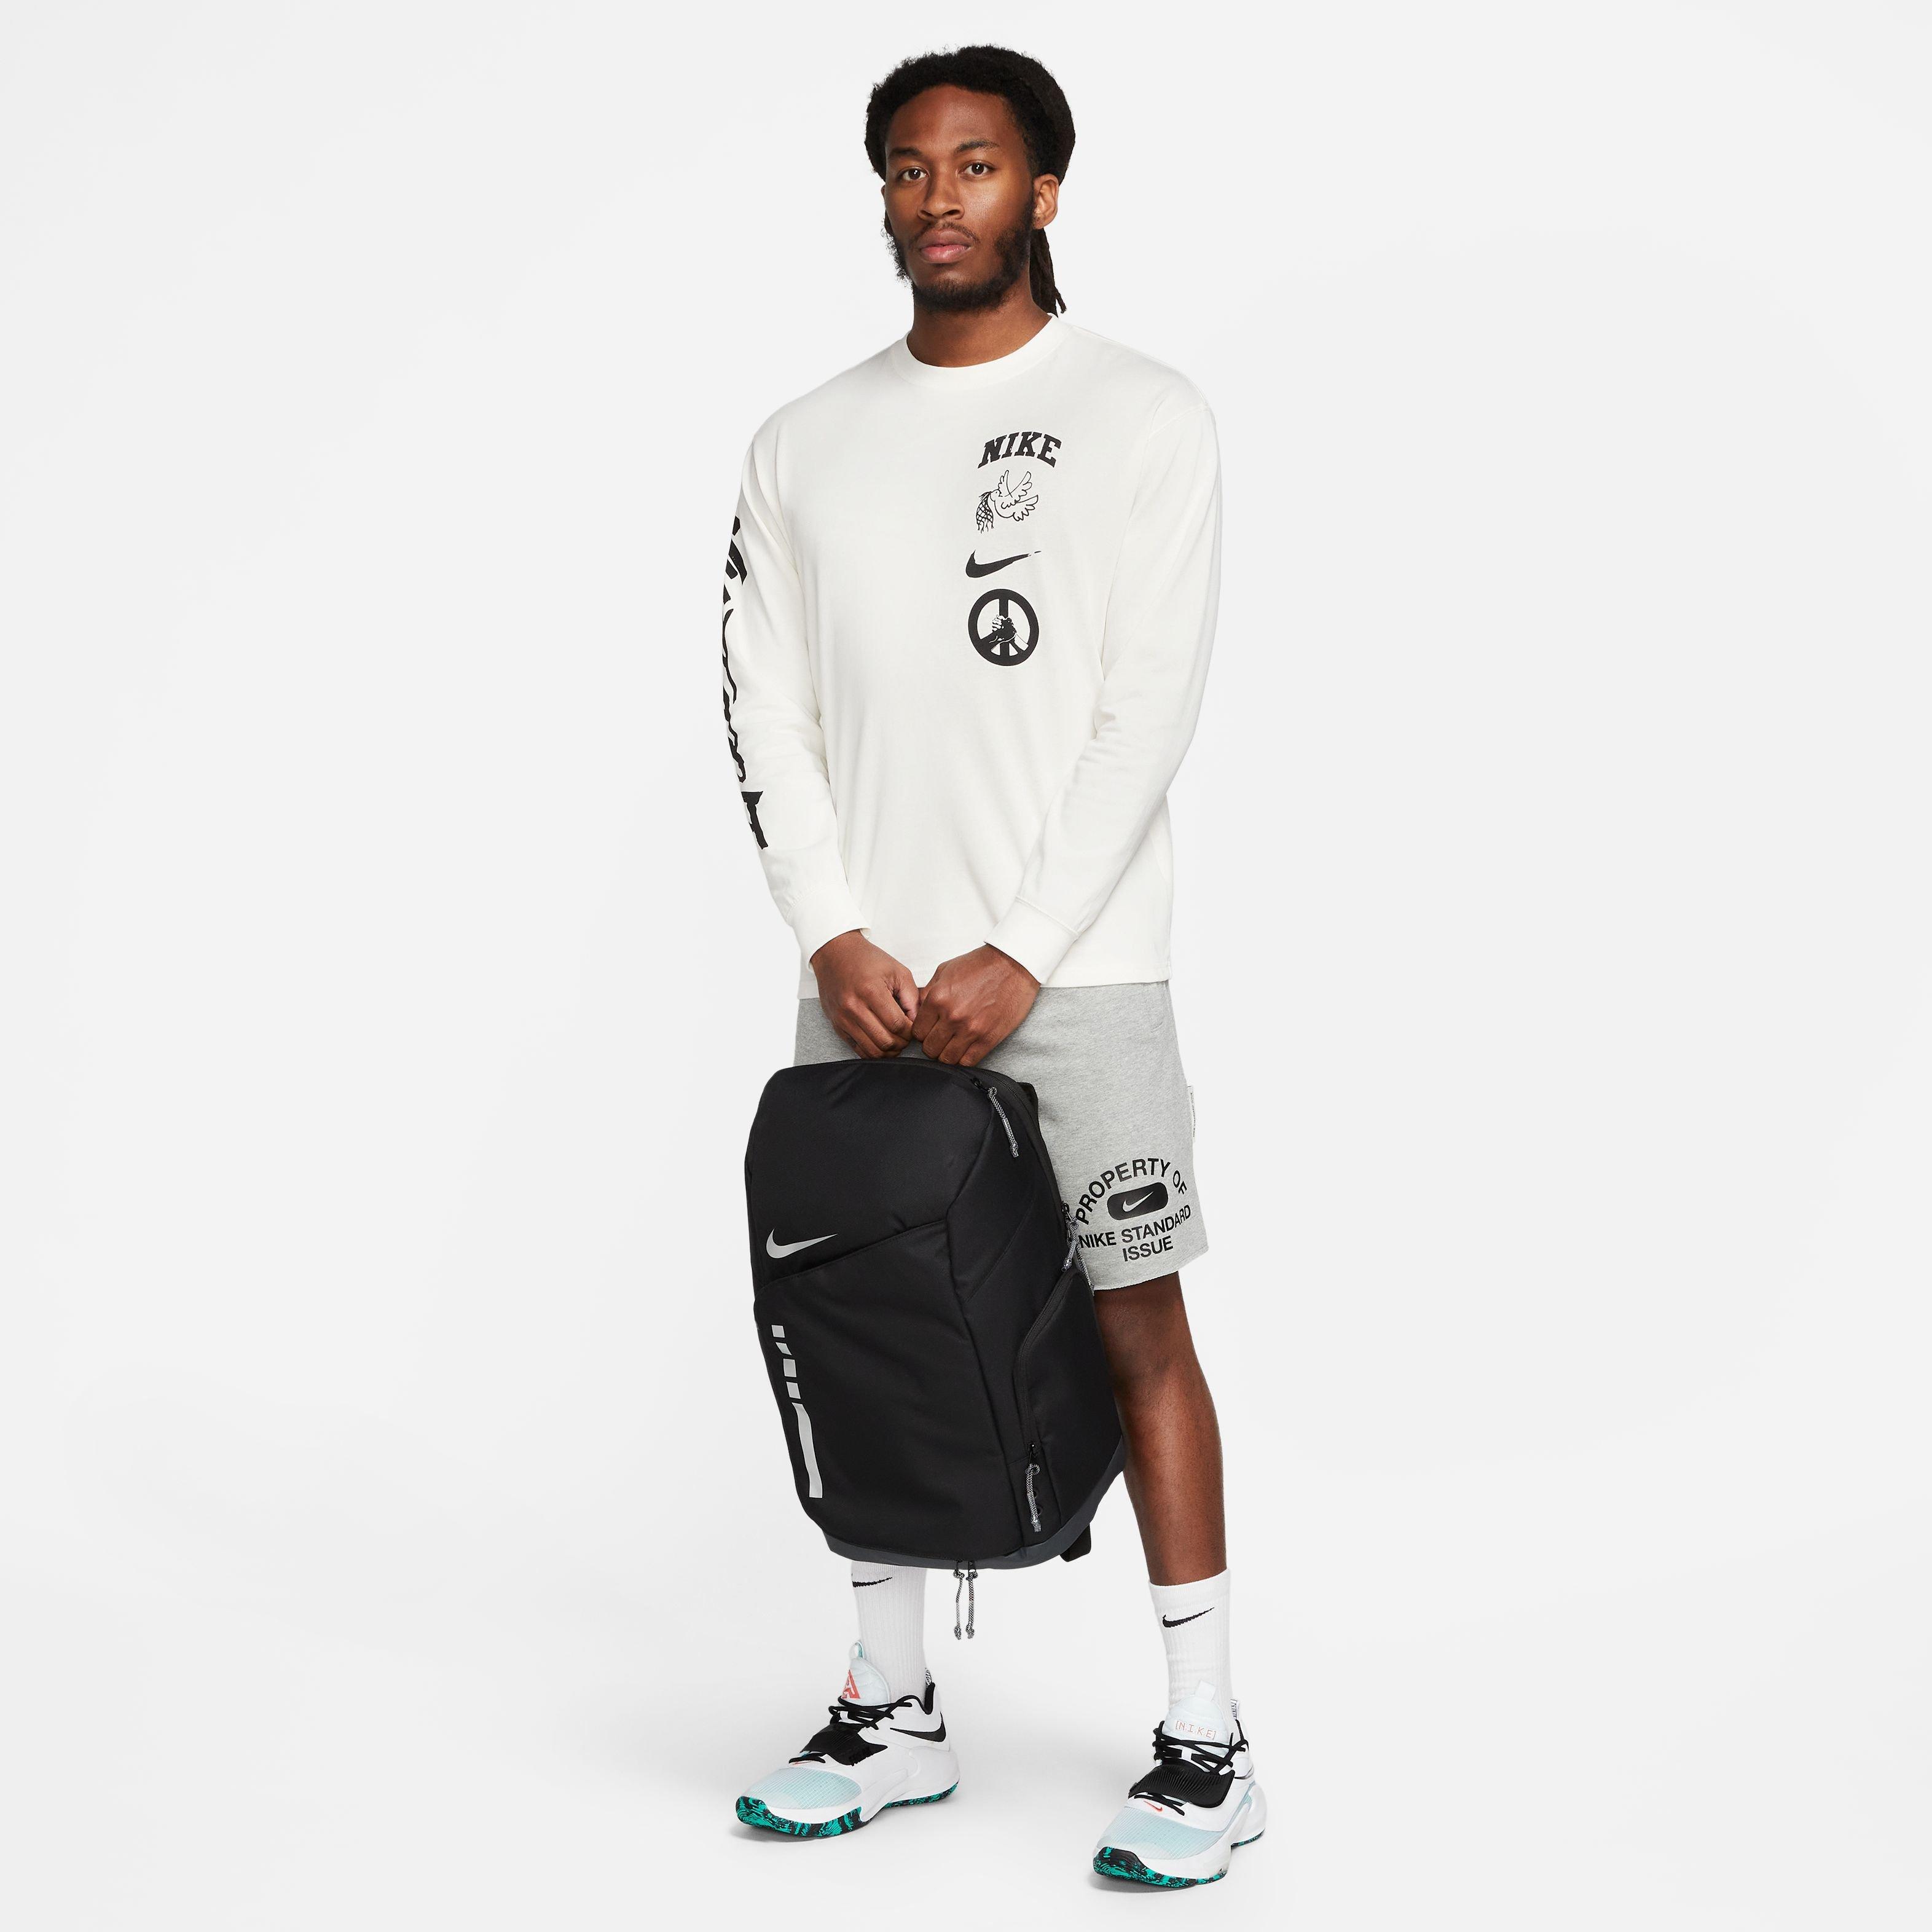 Nike ELITE Pro Backpack Review - Nike Backpack for High School